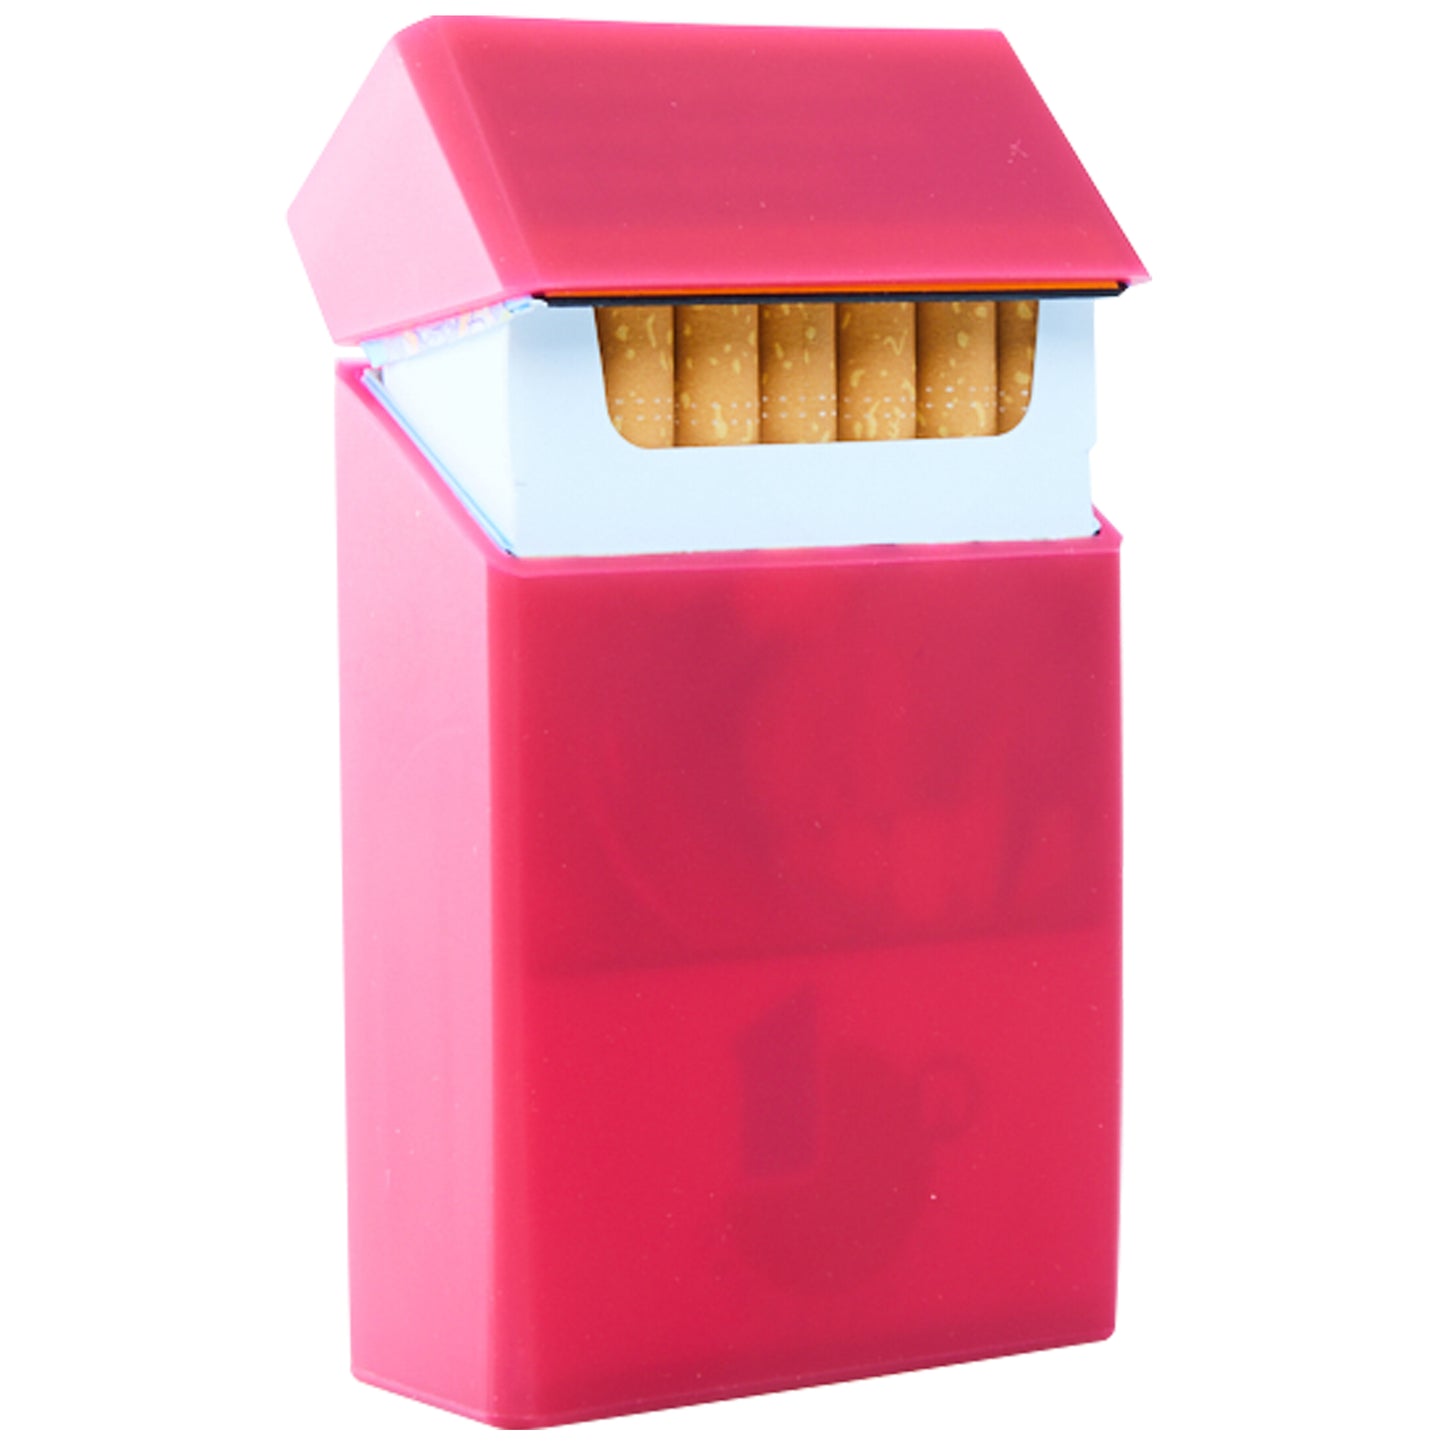 Silicone Cigarette Case for Women & Men - Standard 20 Pack - Fashionable Soft Case